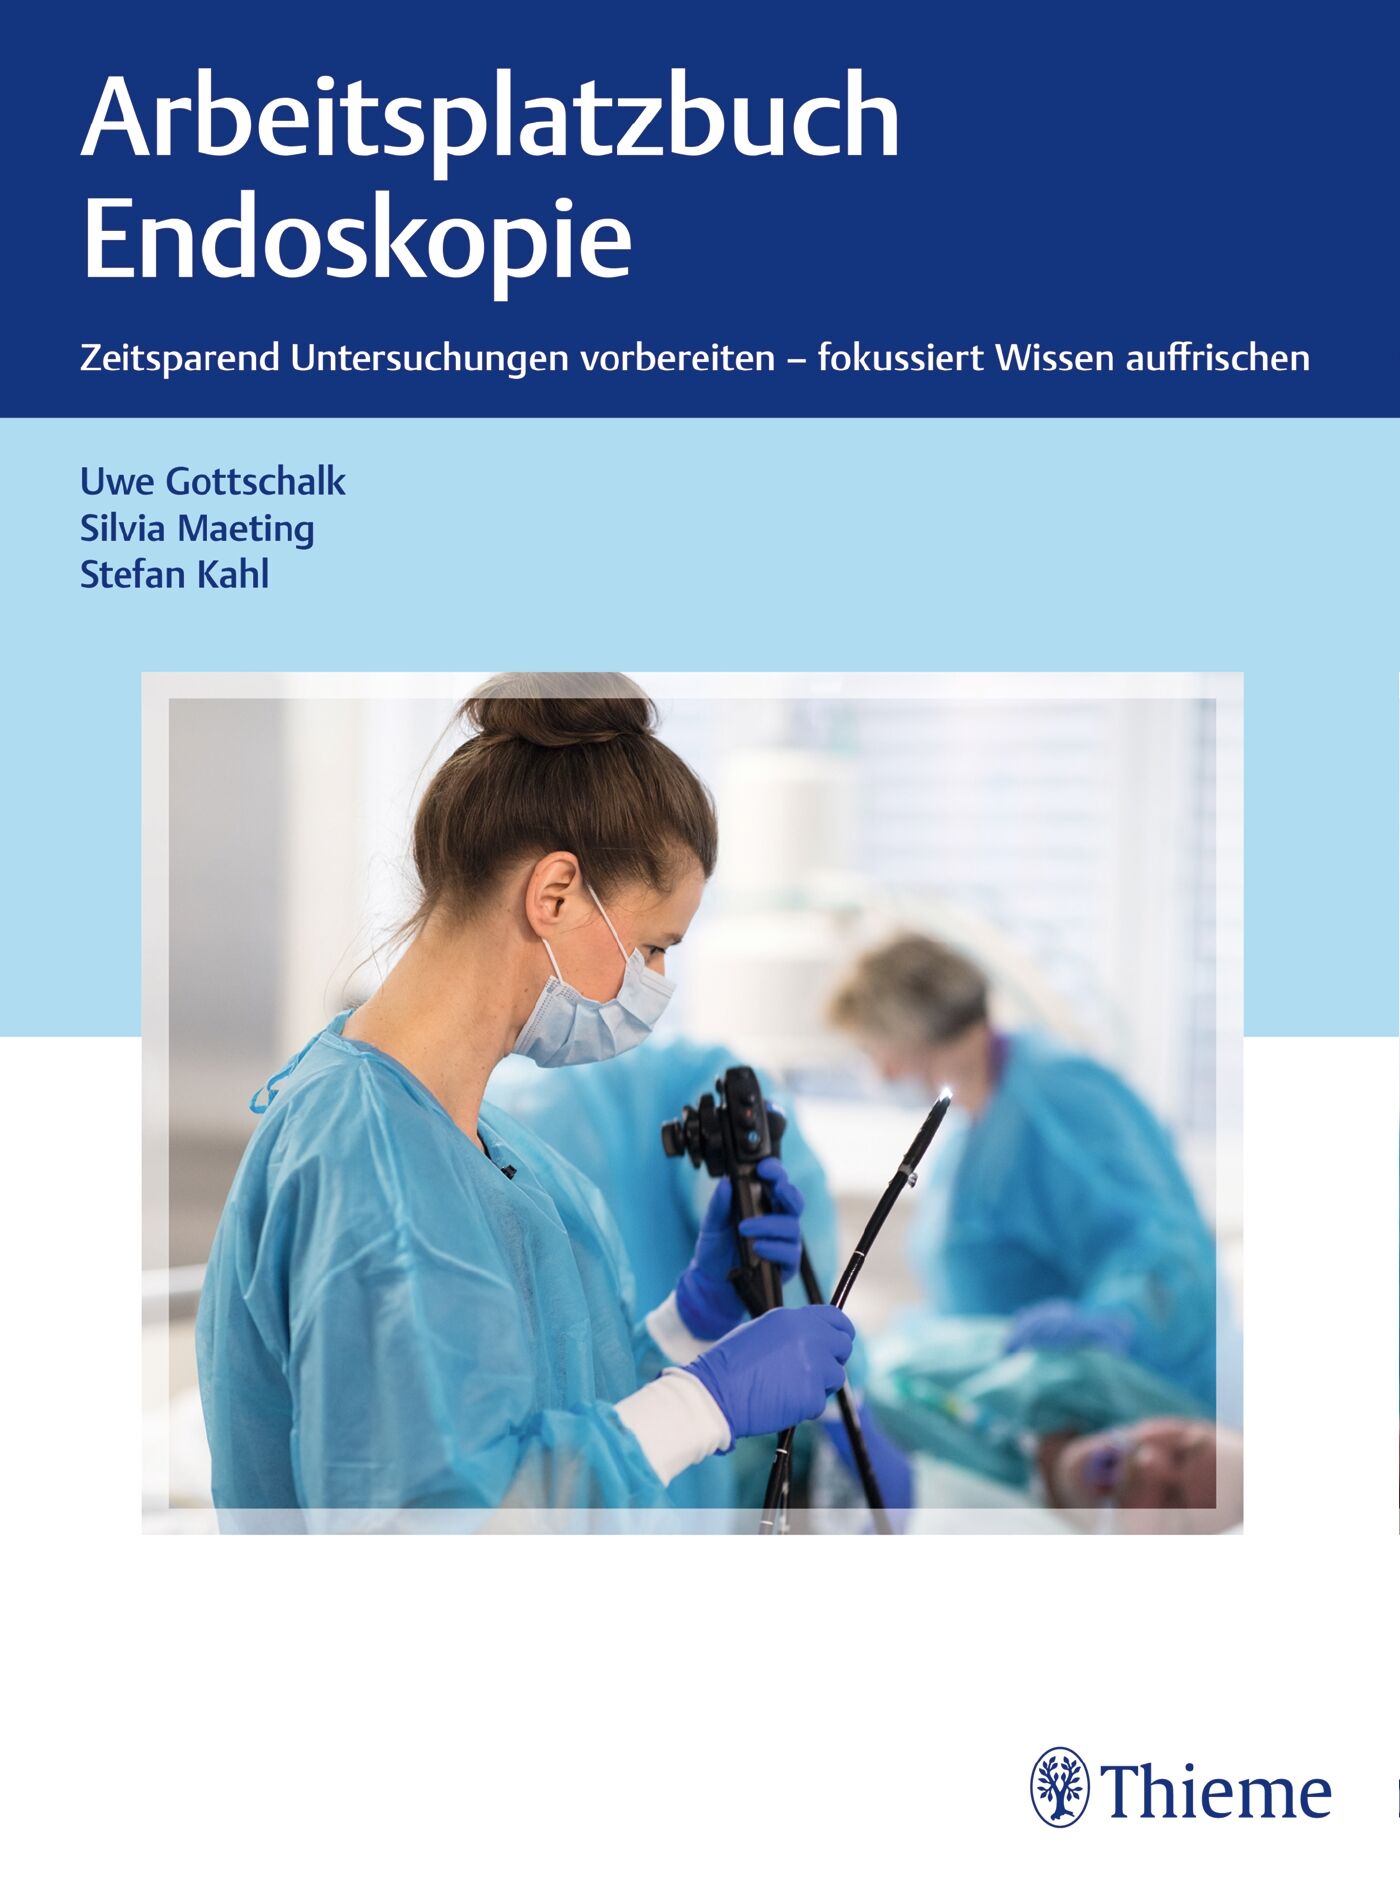 Arbeitsplatzbuch Endoskopie, 9783132405943